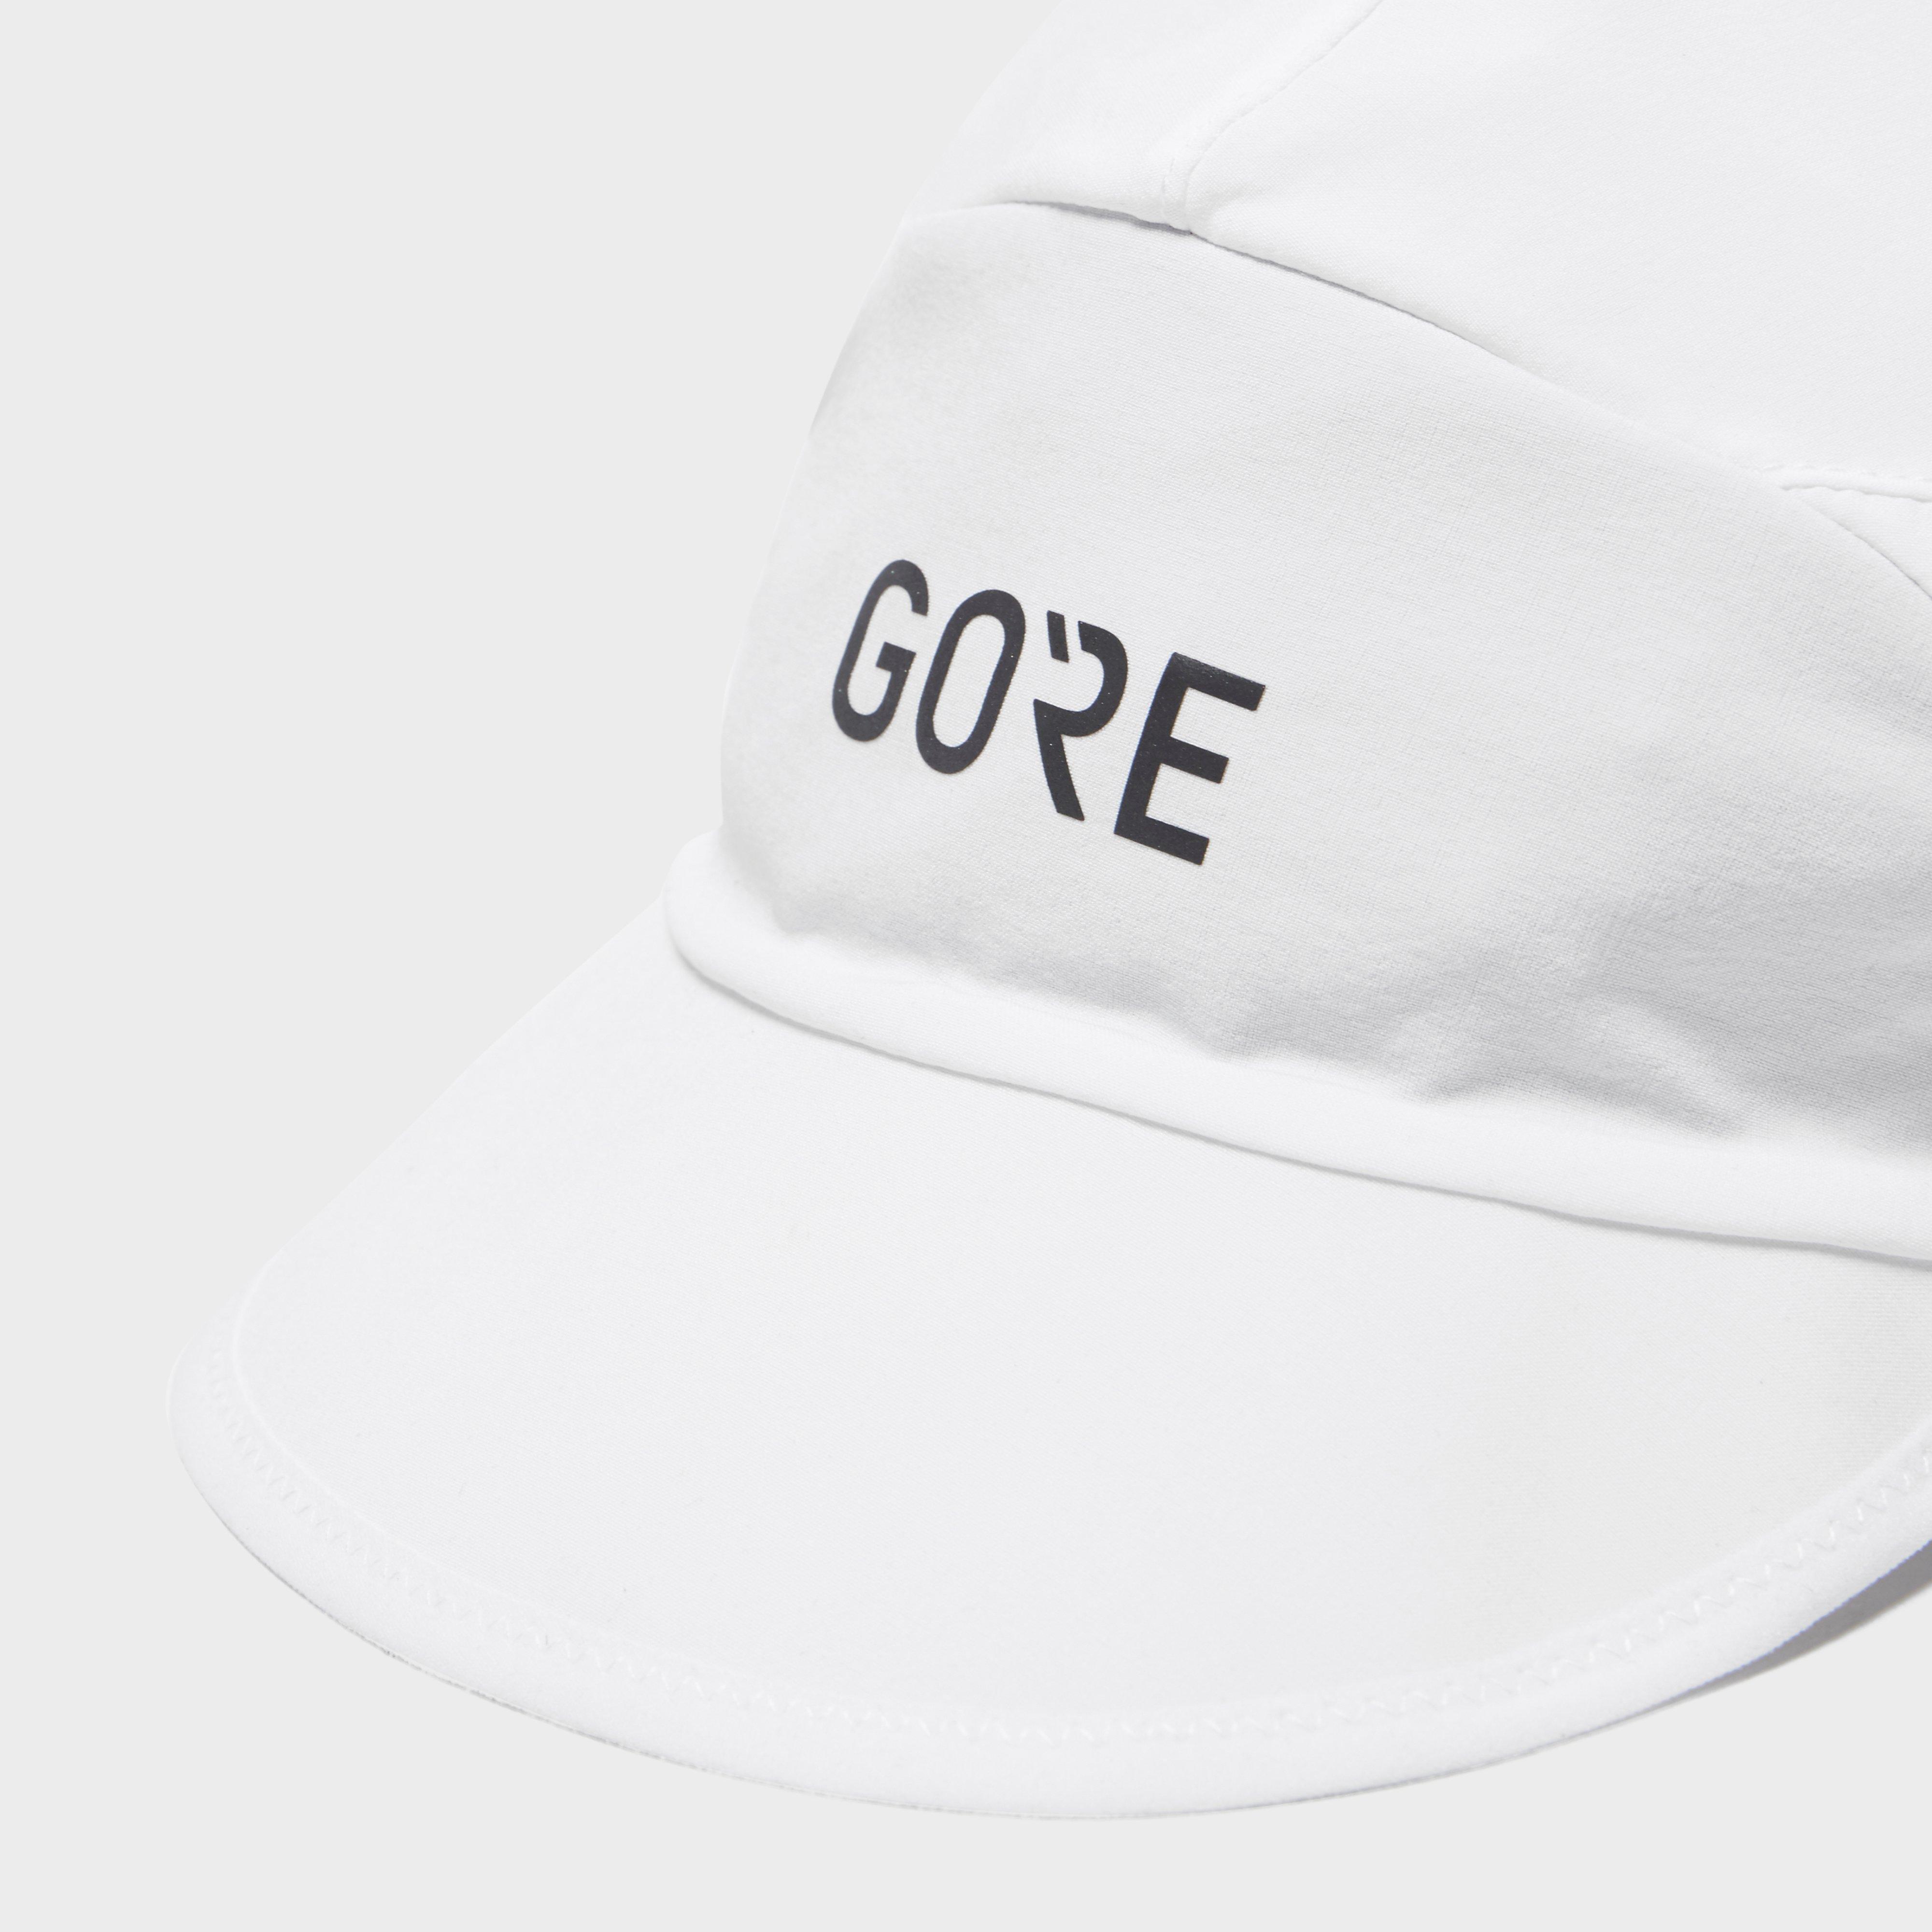 Gore Mens' Light Cap Review